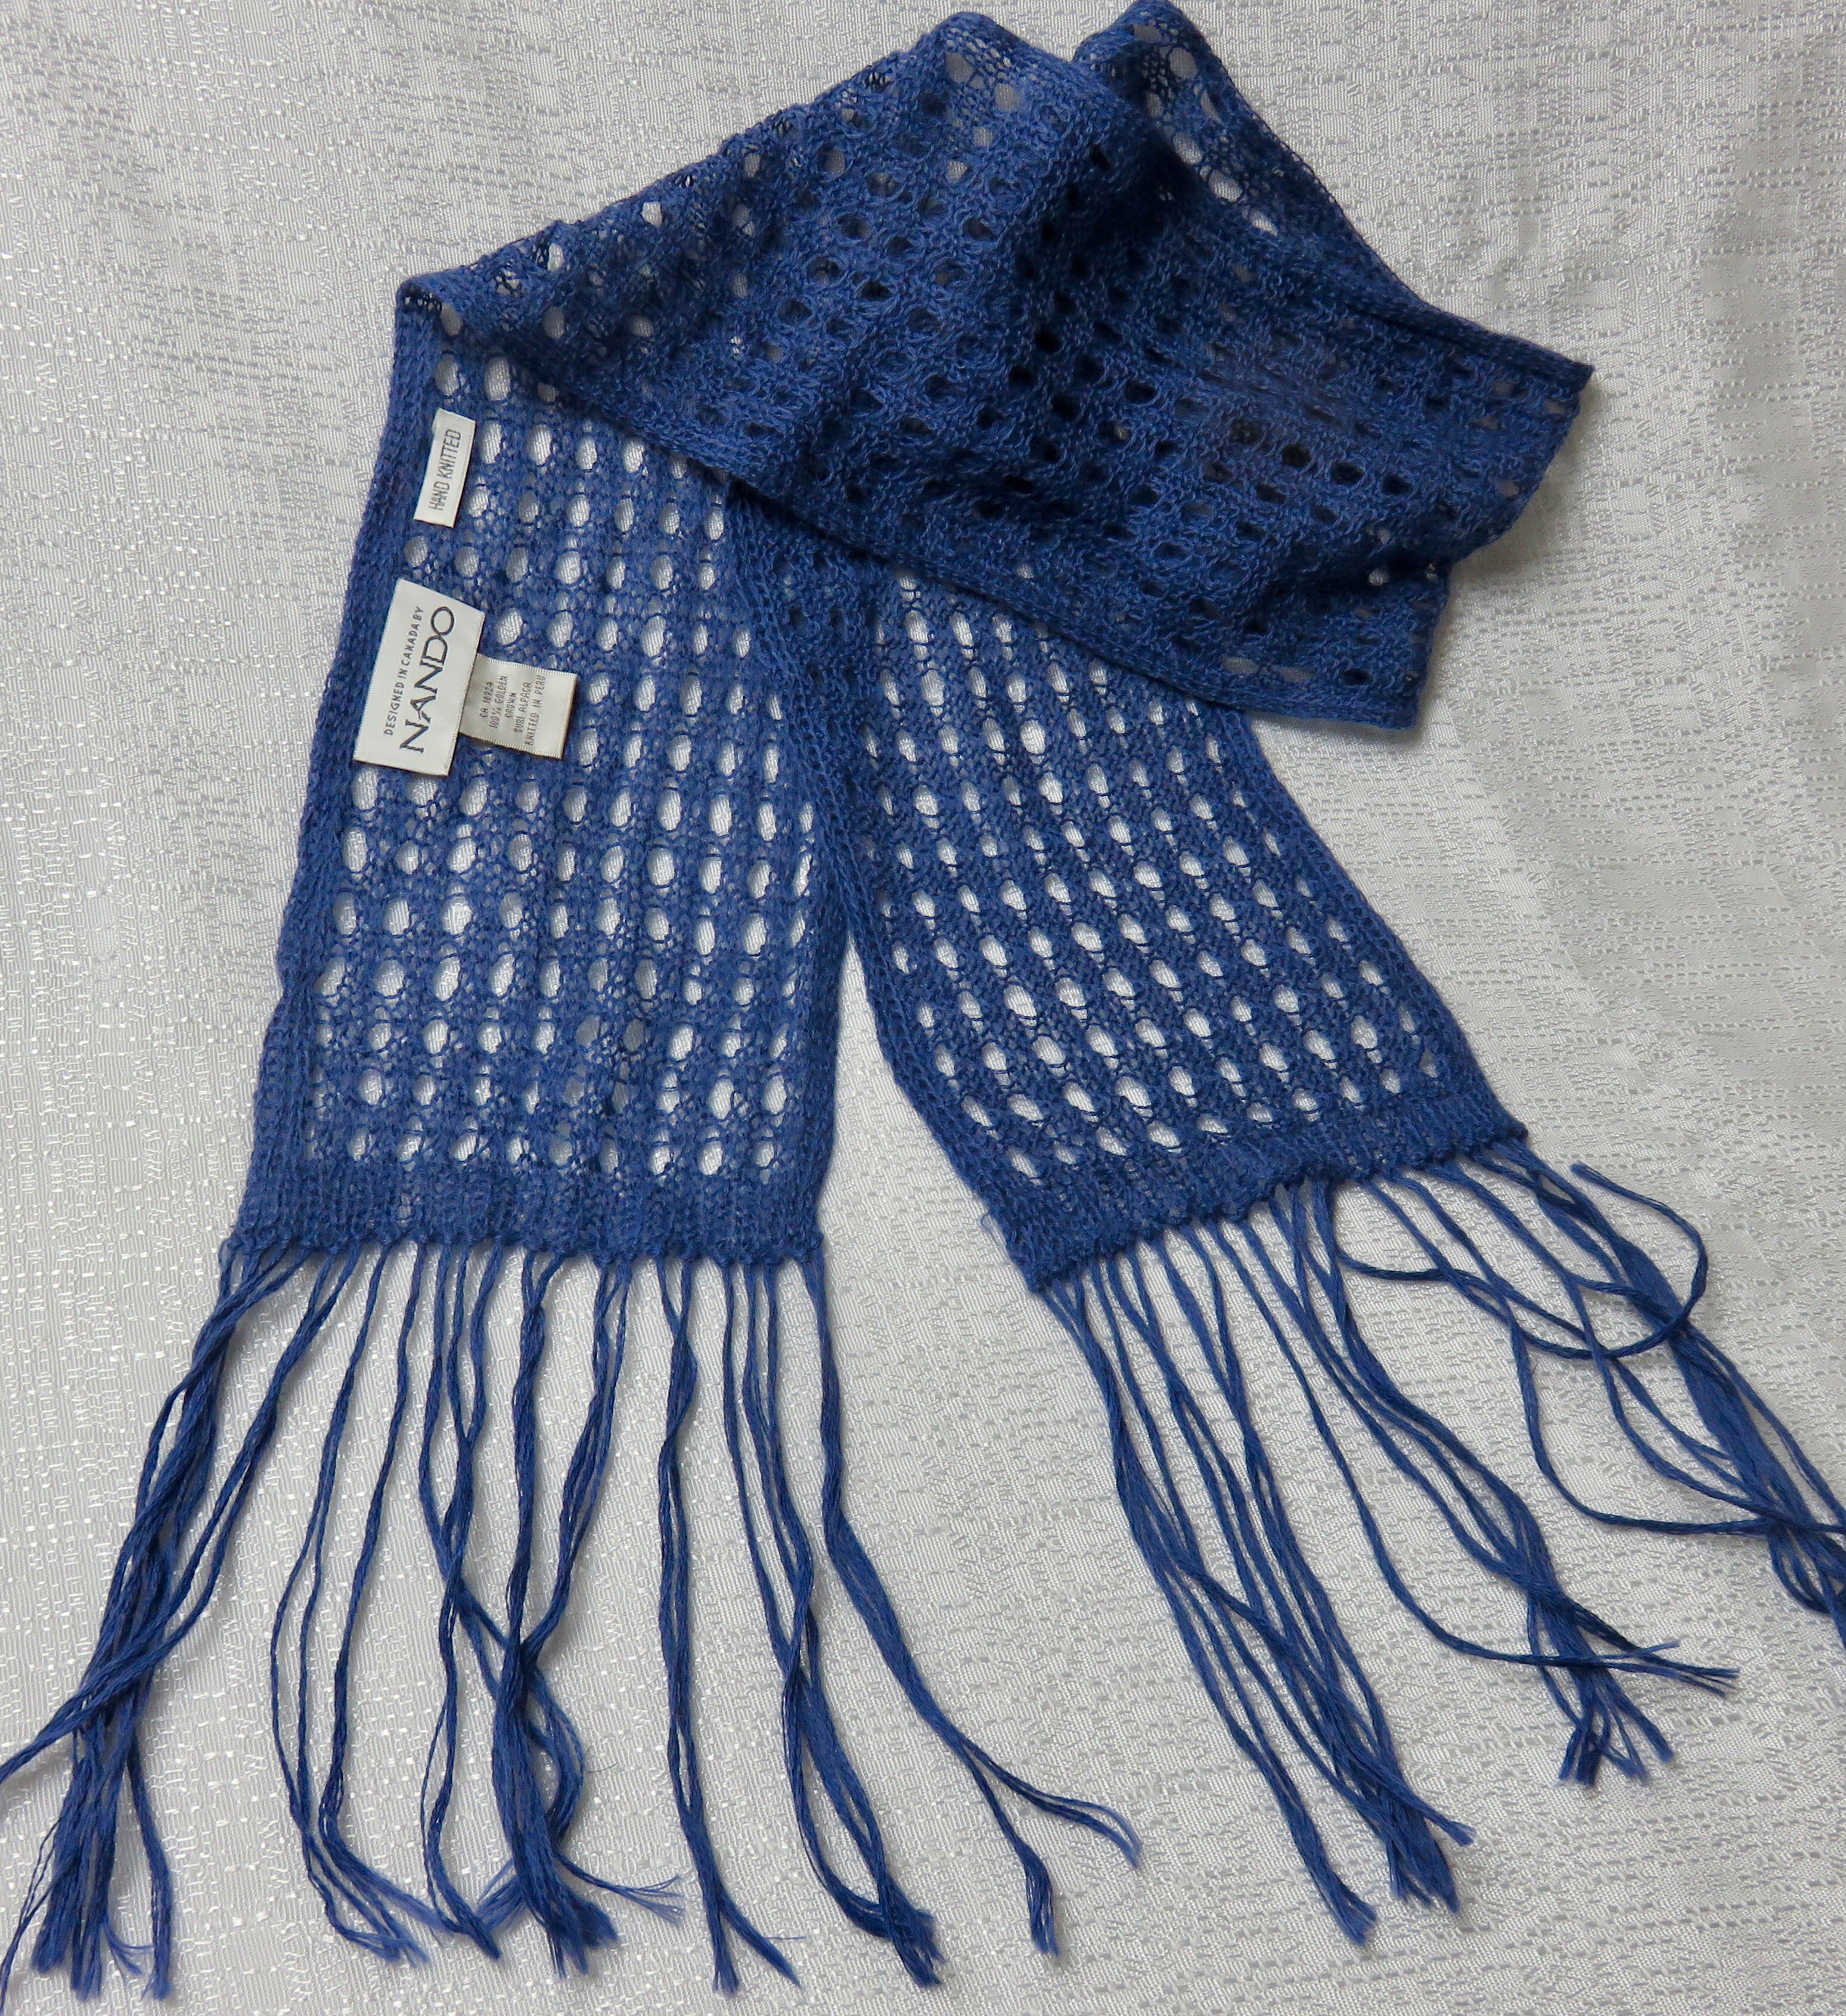 Blue Suri Alpaca Hand Knit Scarf